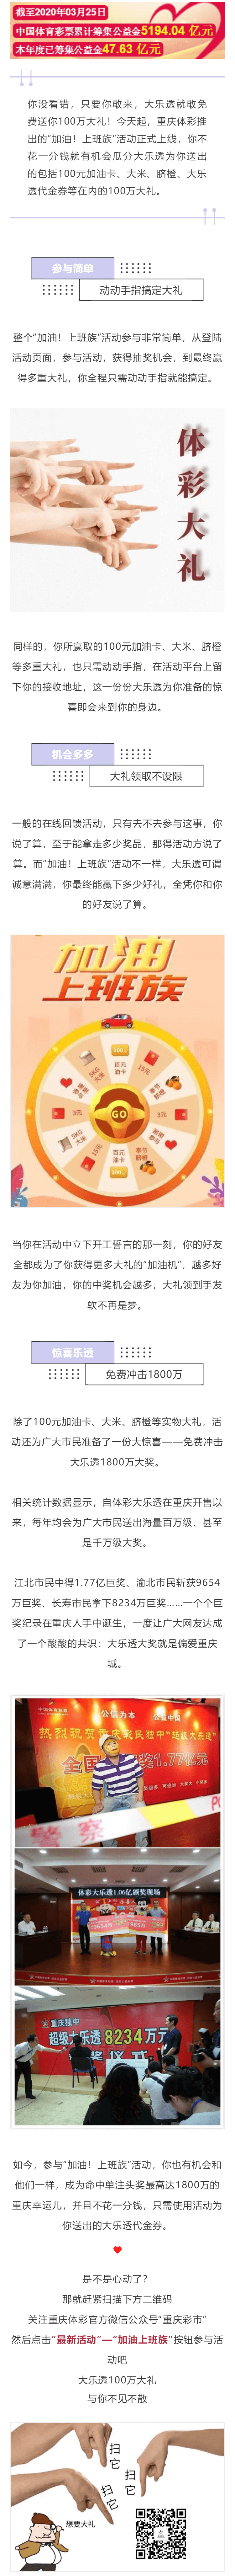 20200327_1500_yiban_screenshot.png